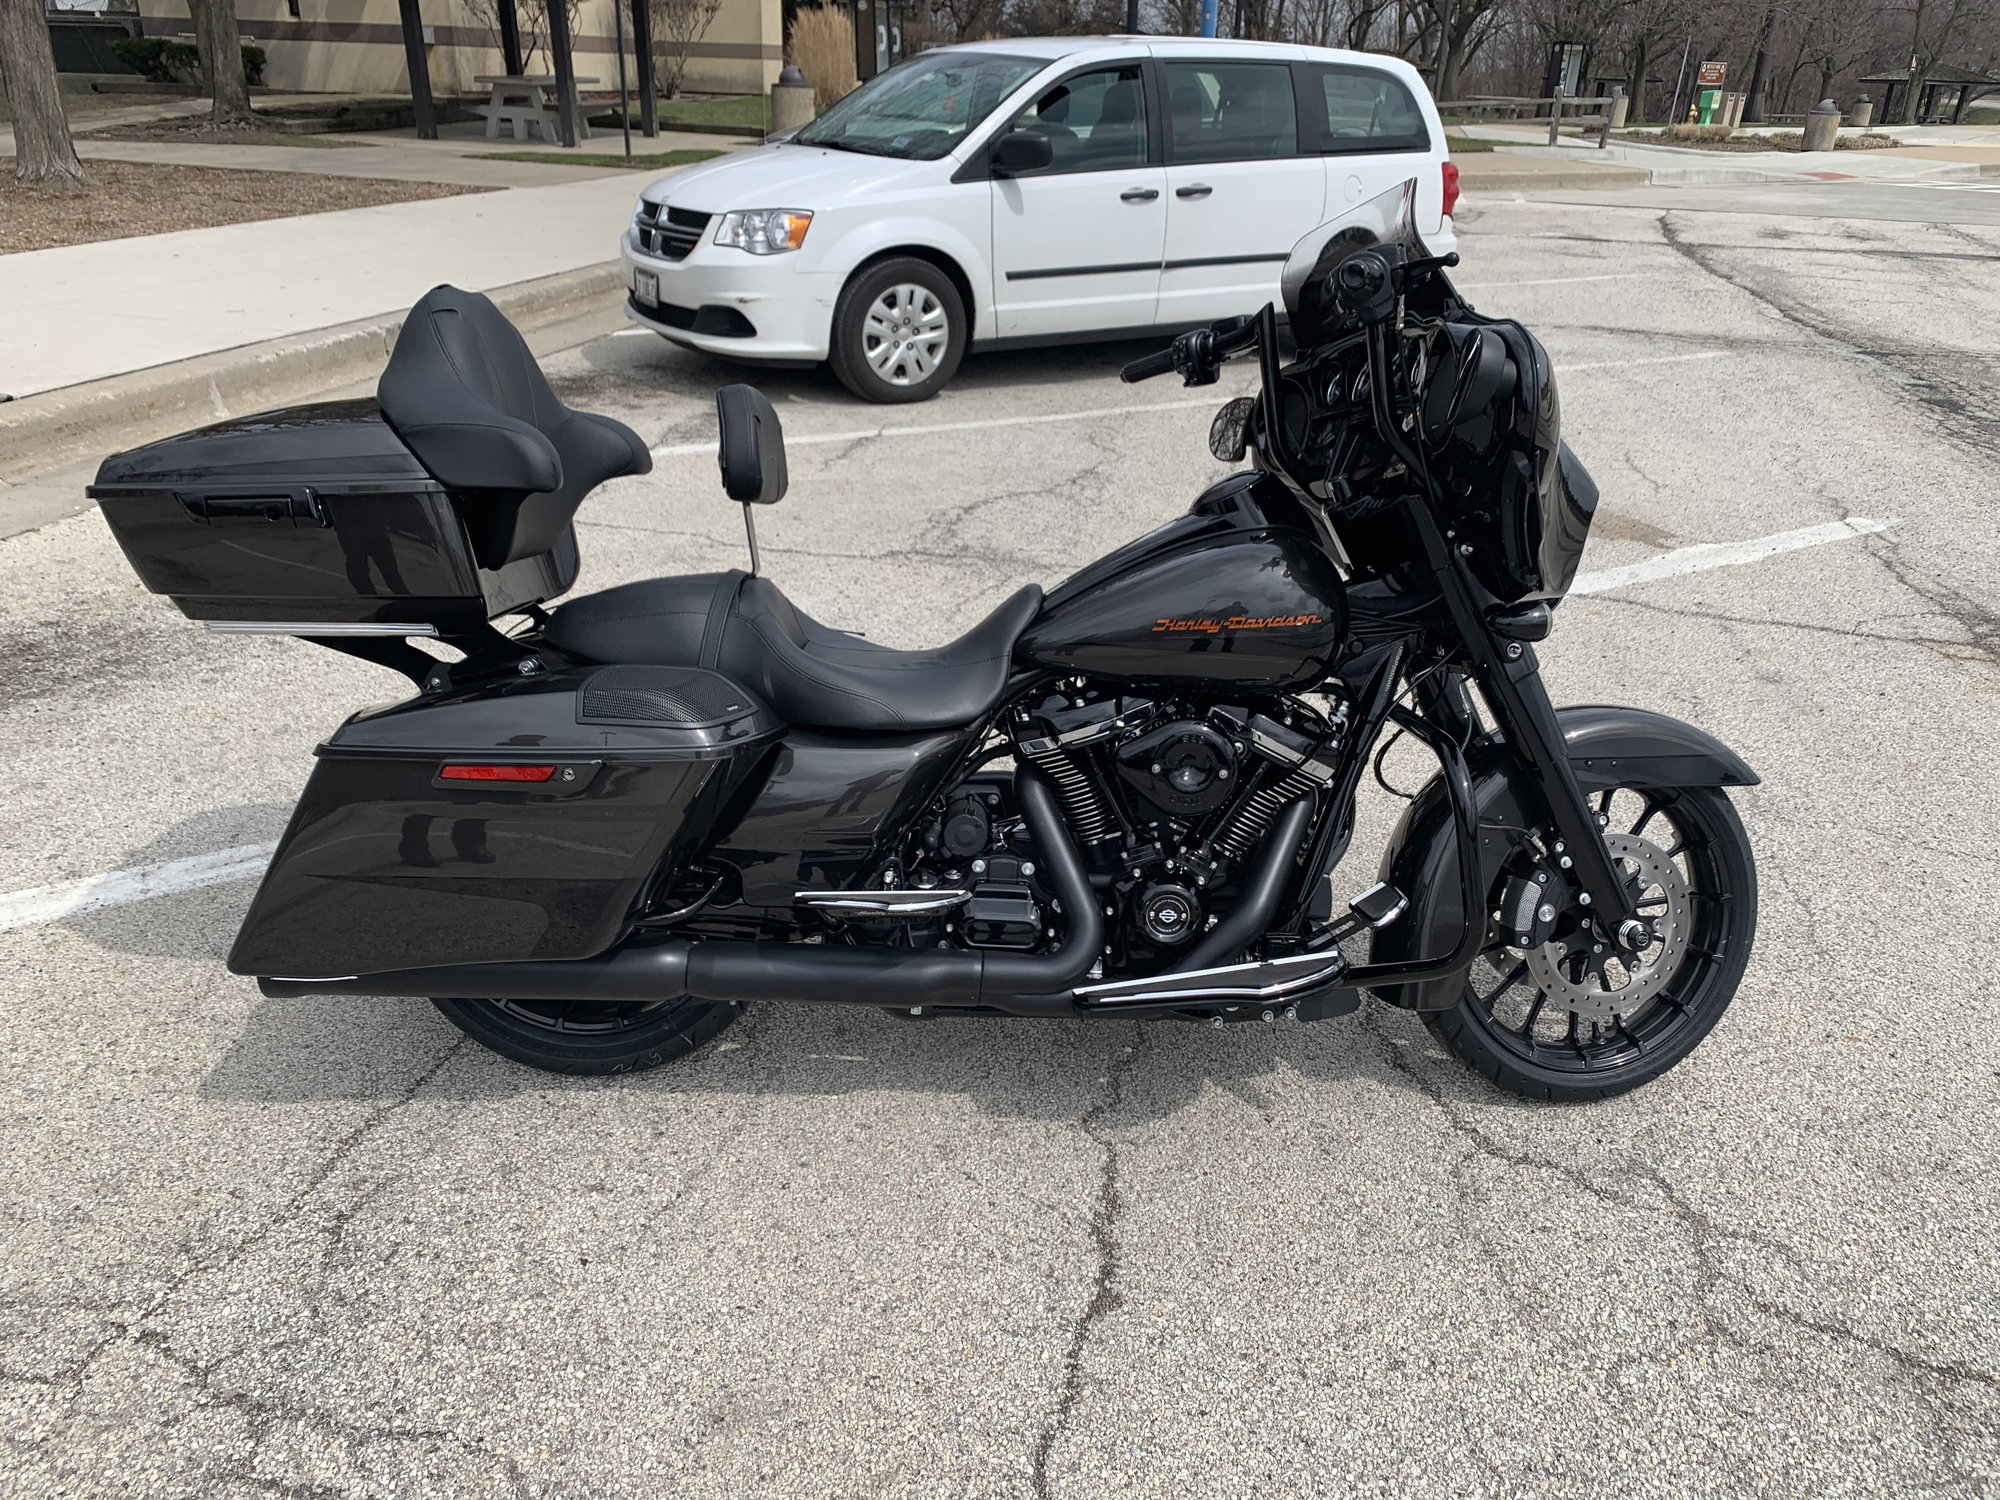 New Ride 2019 Sgs Silver Flux Black Fuse Harley Davidson Forums